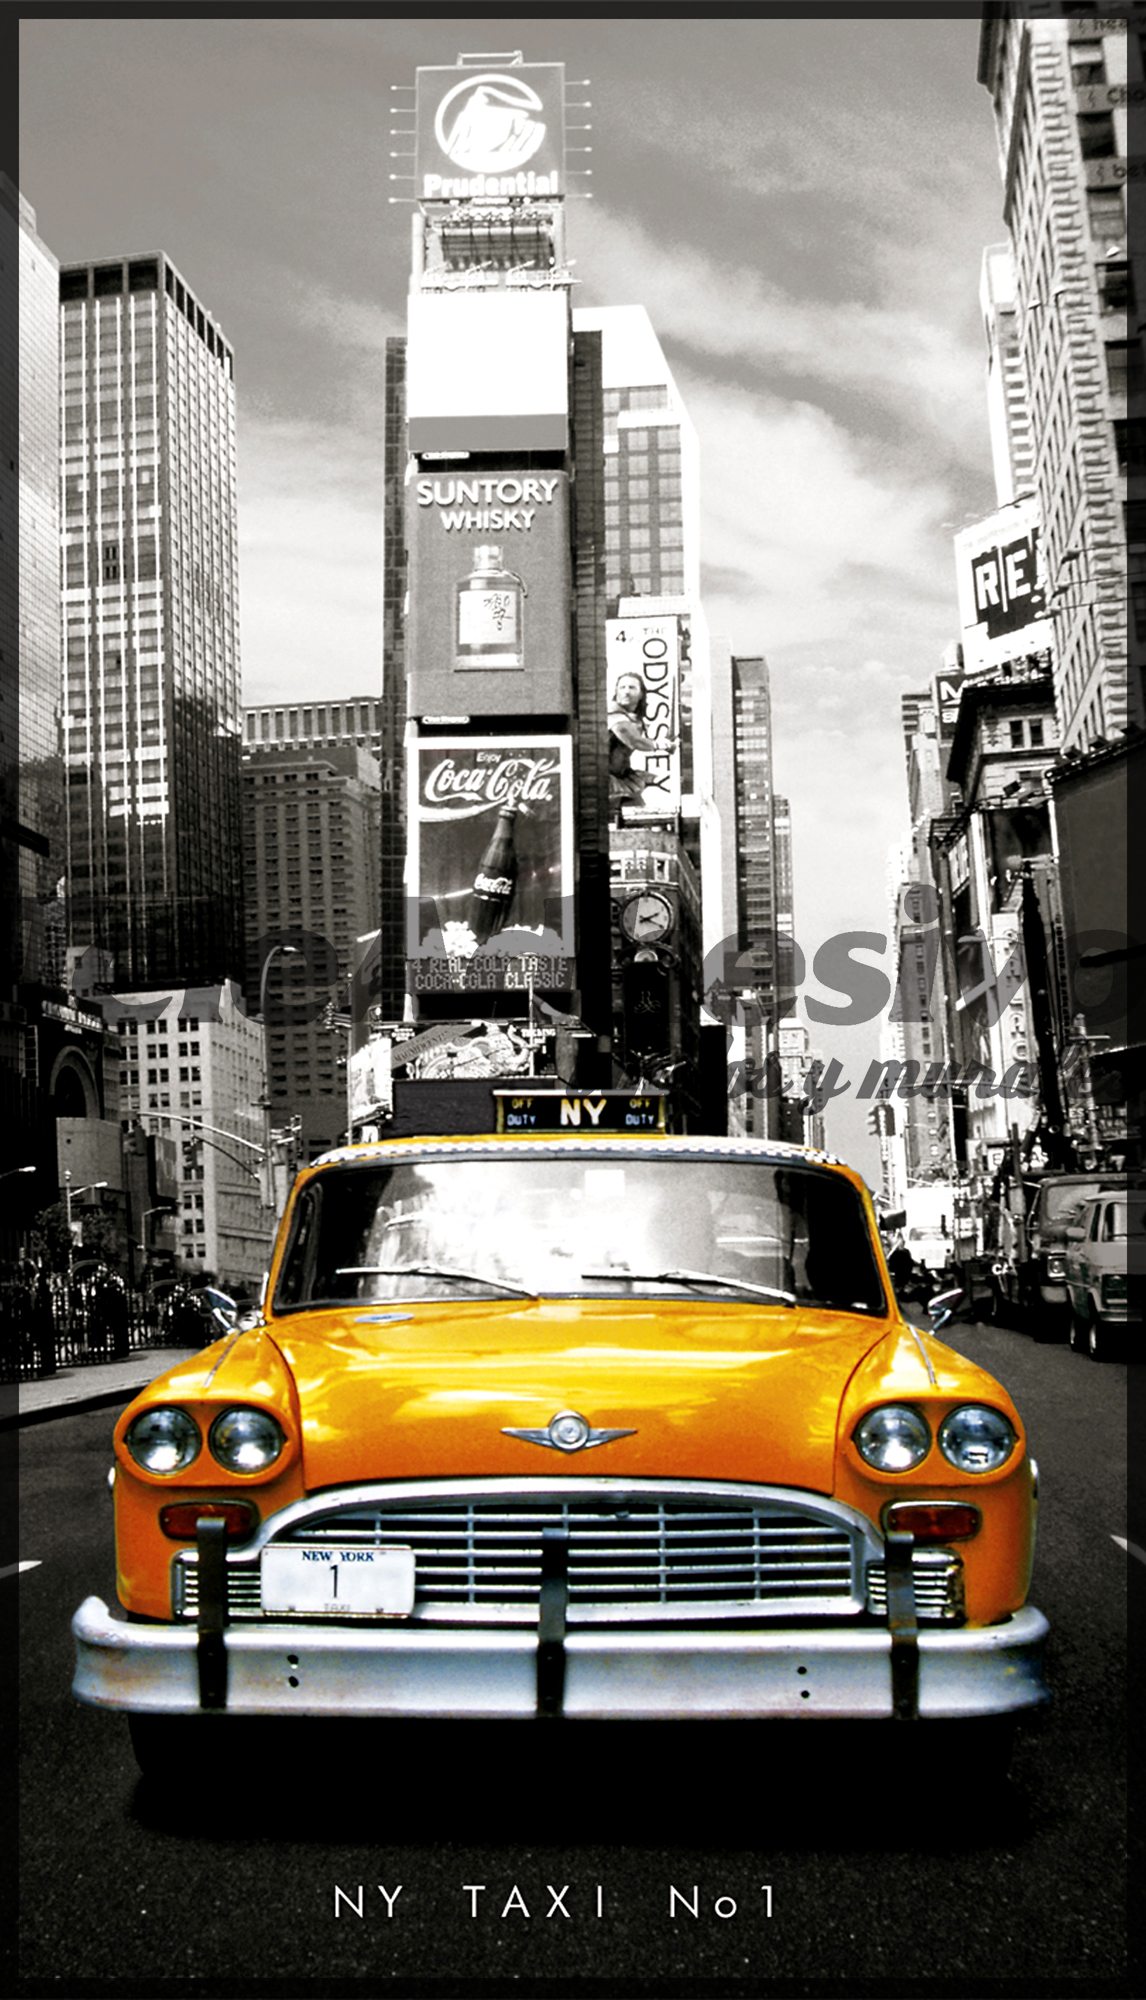 Poster xxl: New York taxi